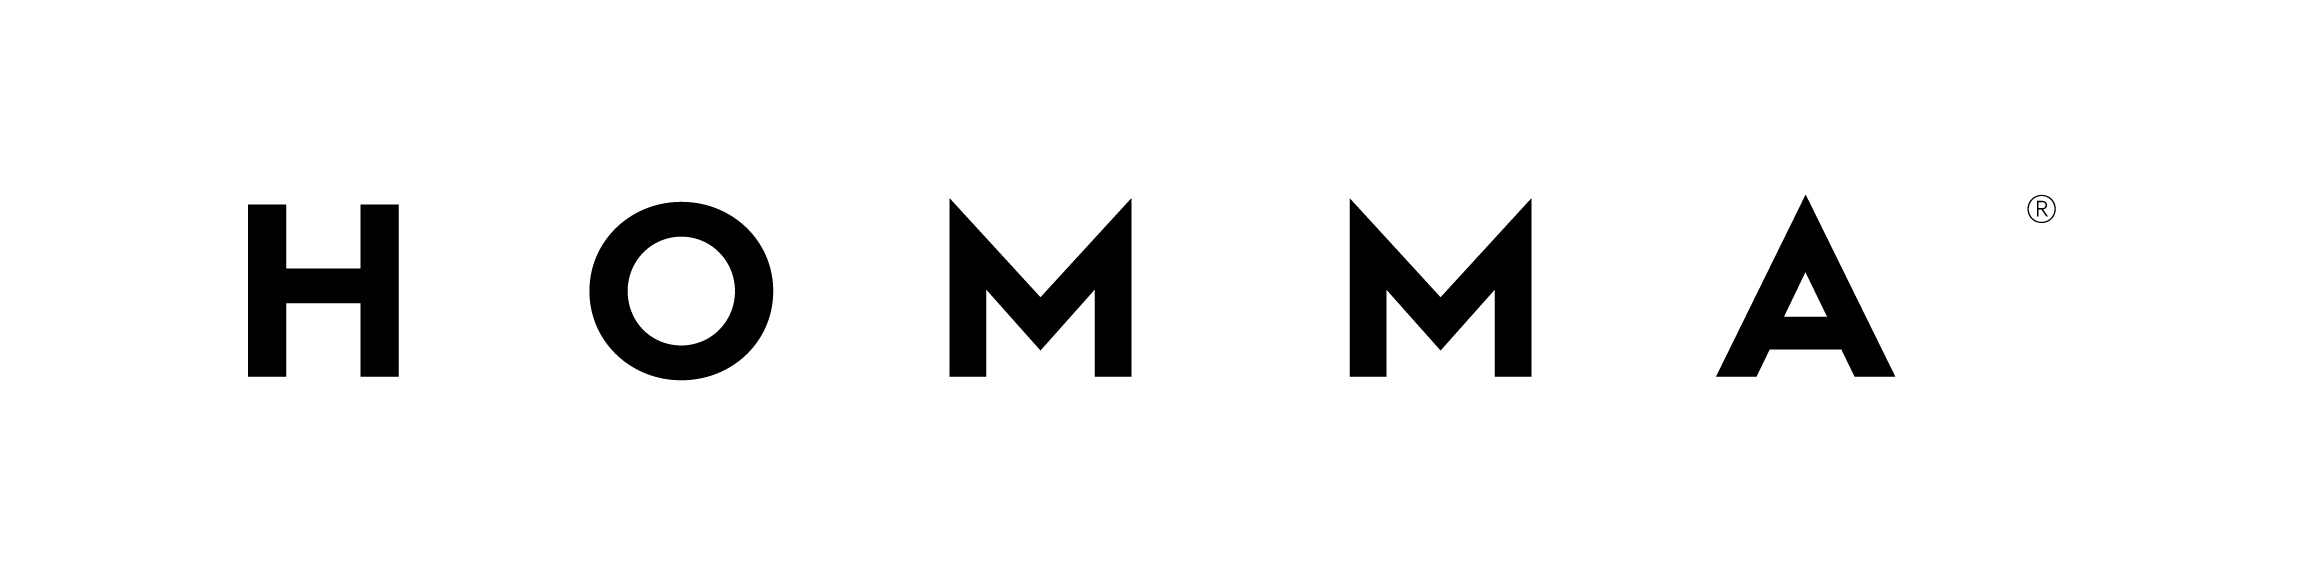 HOMMA logo